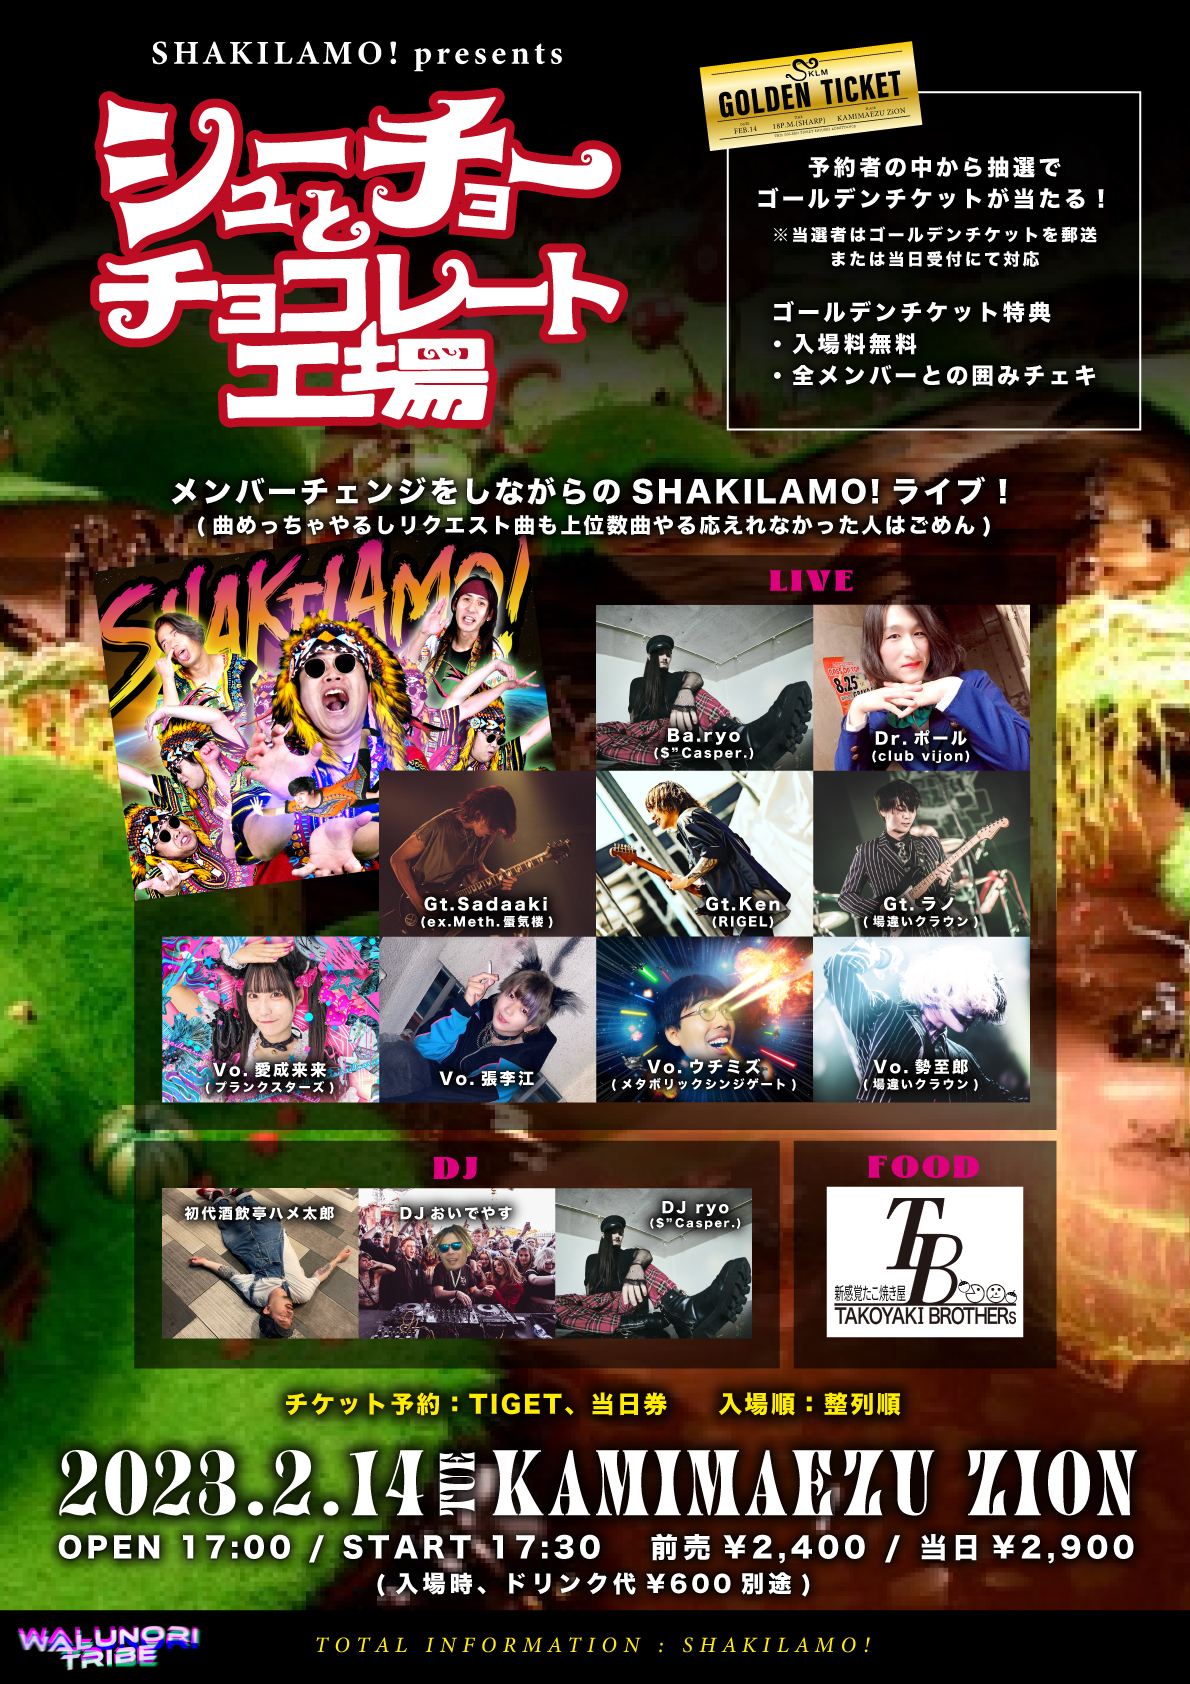 ORESKABAND 20th Anniversary “THE CEREMONY”※振替公演